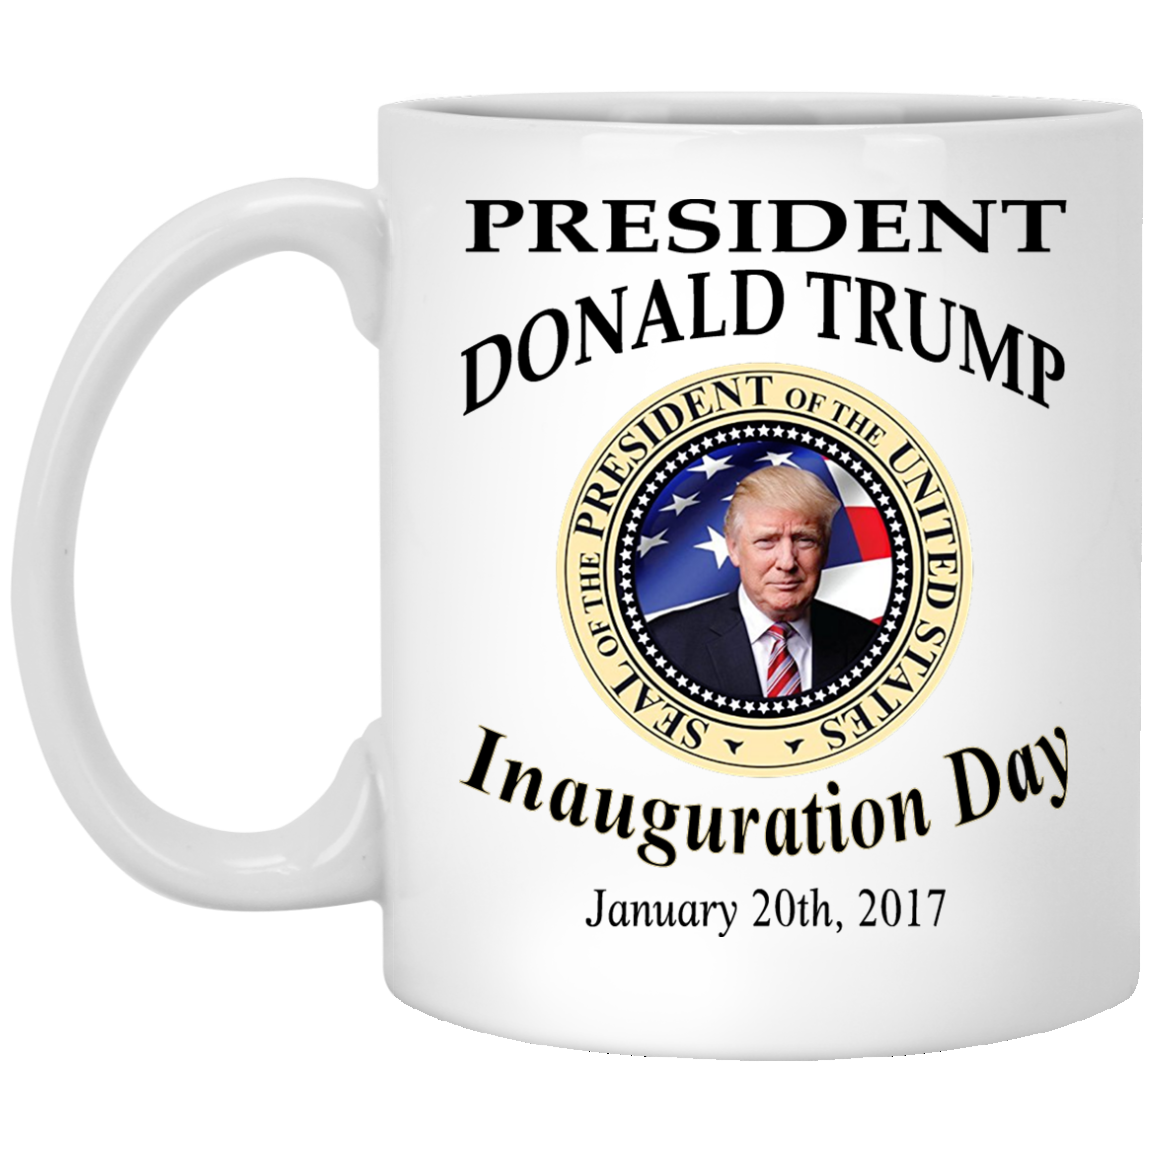 President Donald Trump Inauguration Day Mugs